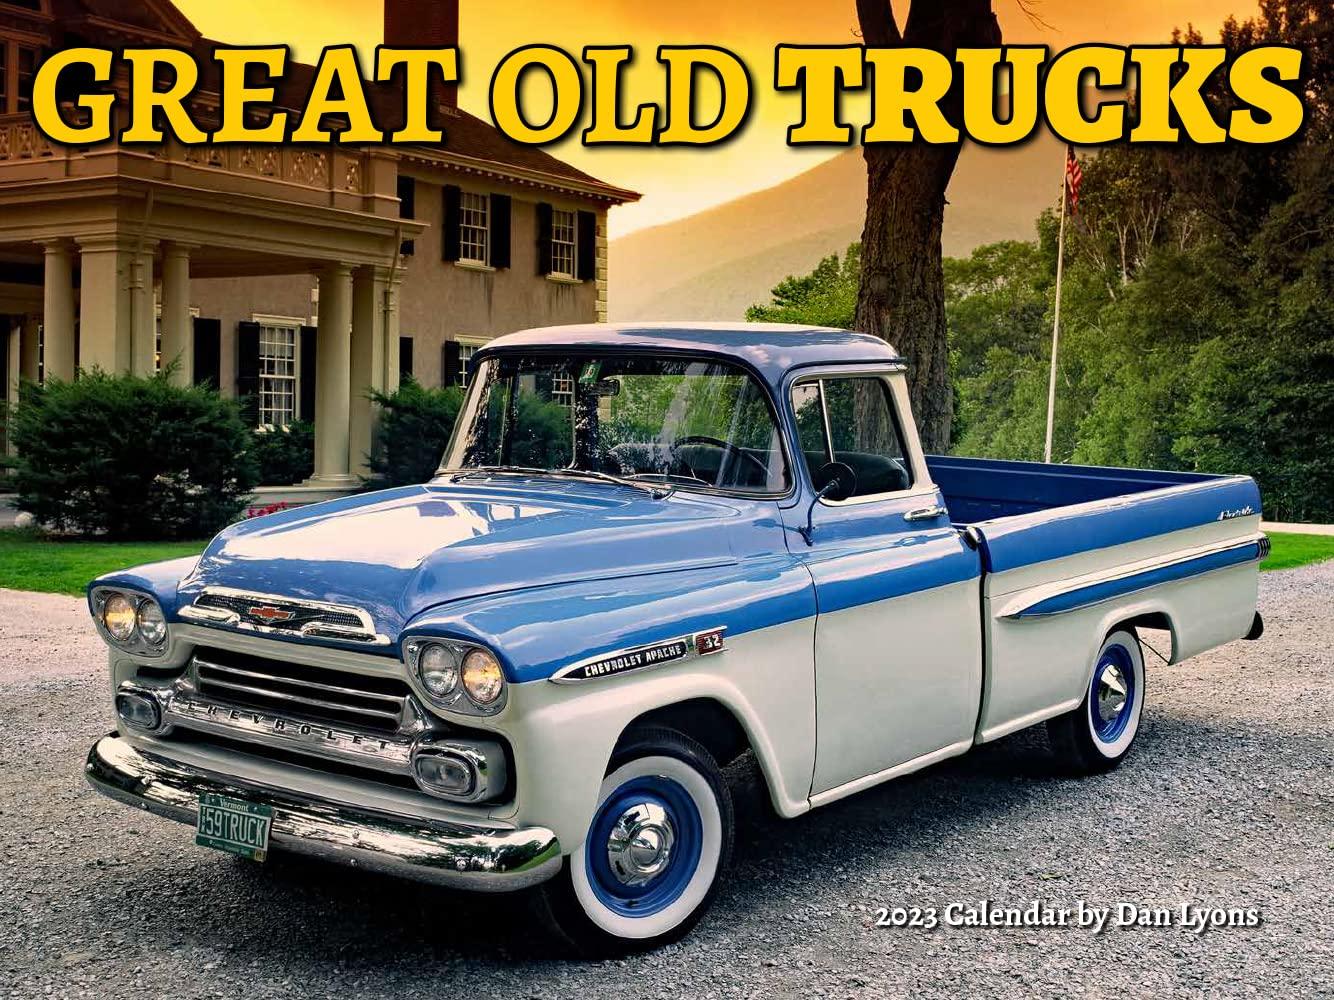 Great Old Trucks 2023 Deluxe Wall Calendar